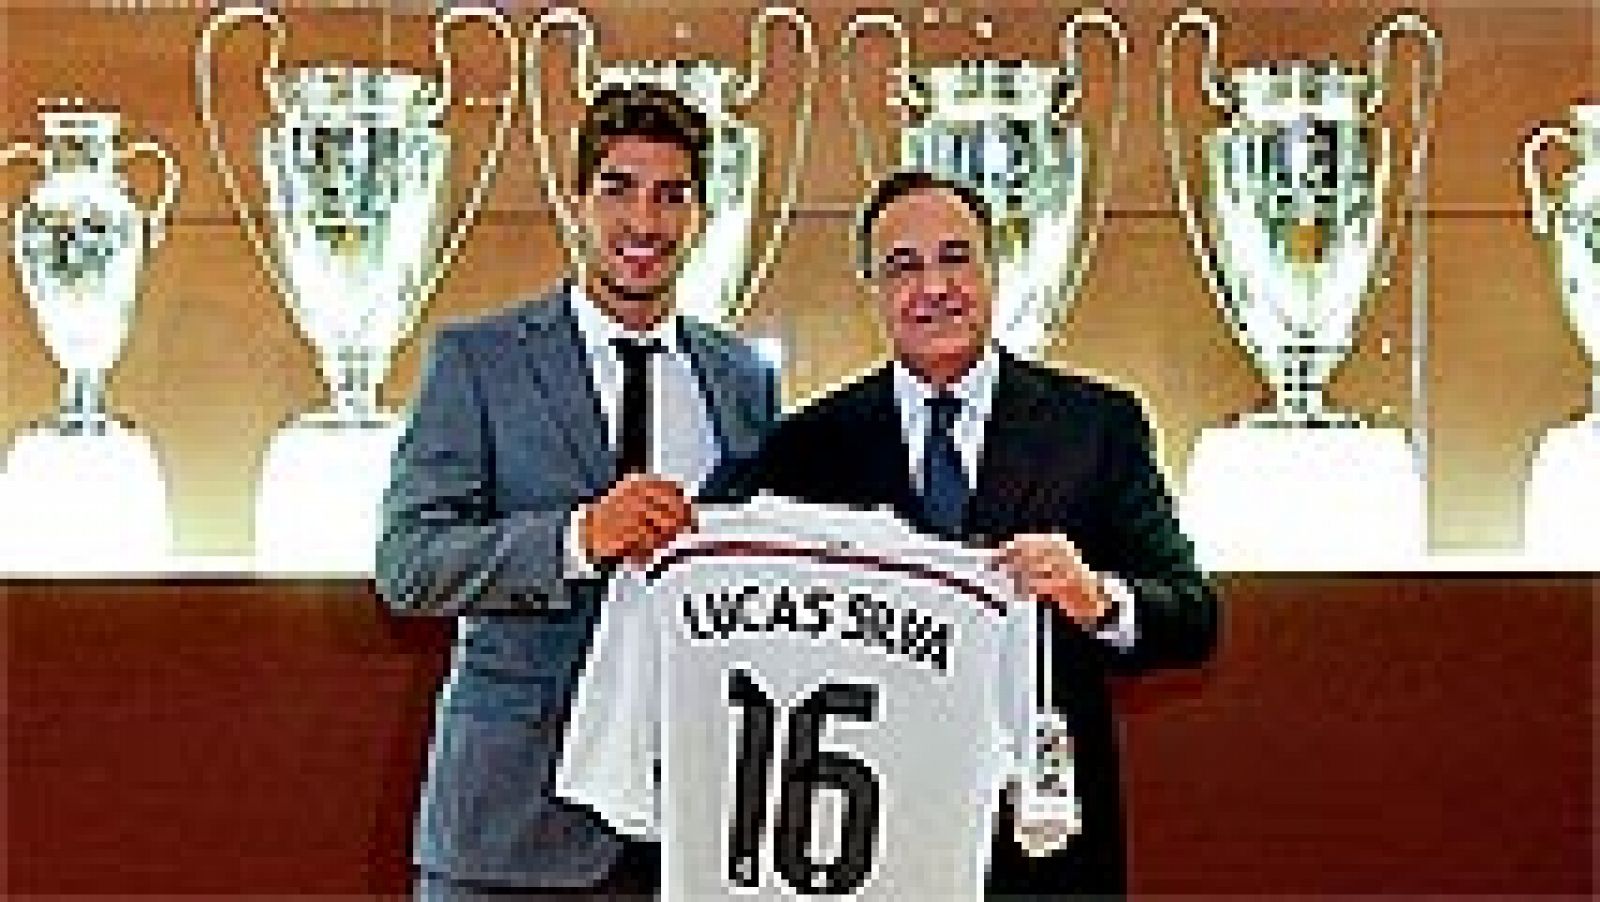 Telediario 1: Lucas Silva, preparado para "honrar al Madrid" | RTVE Play